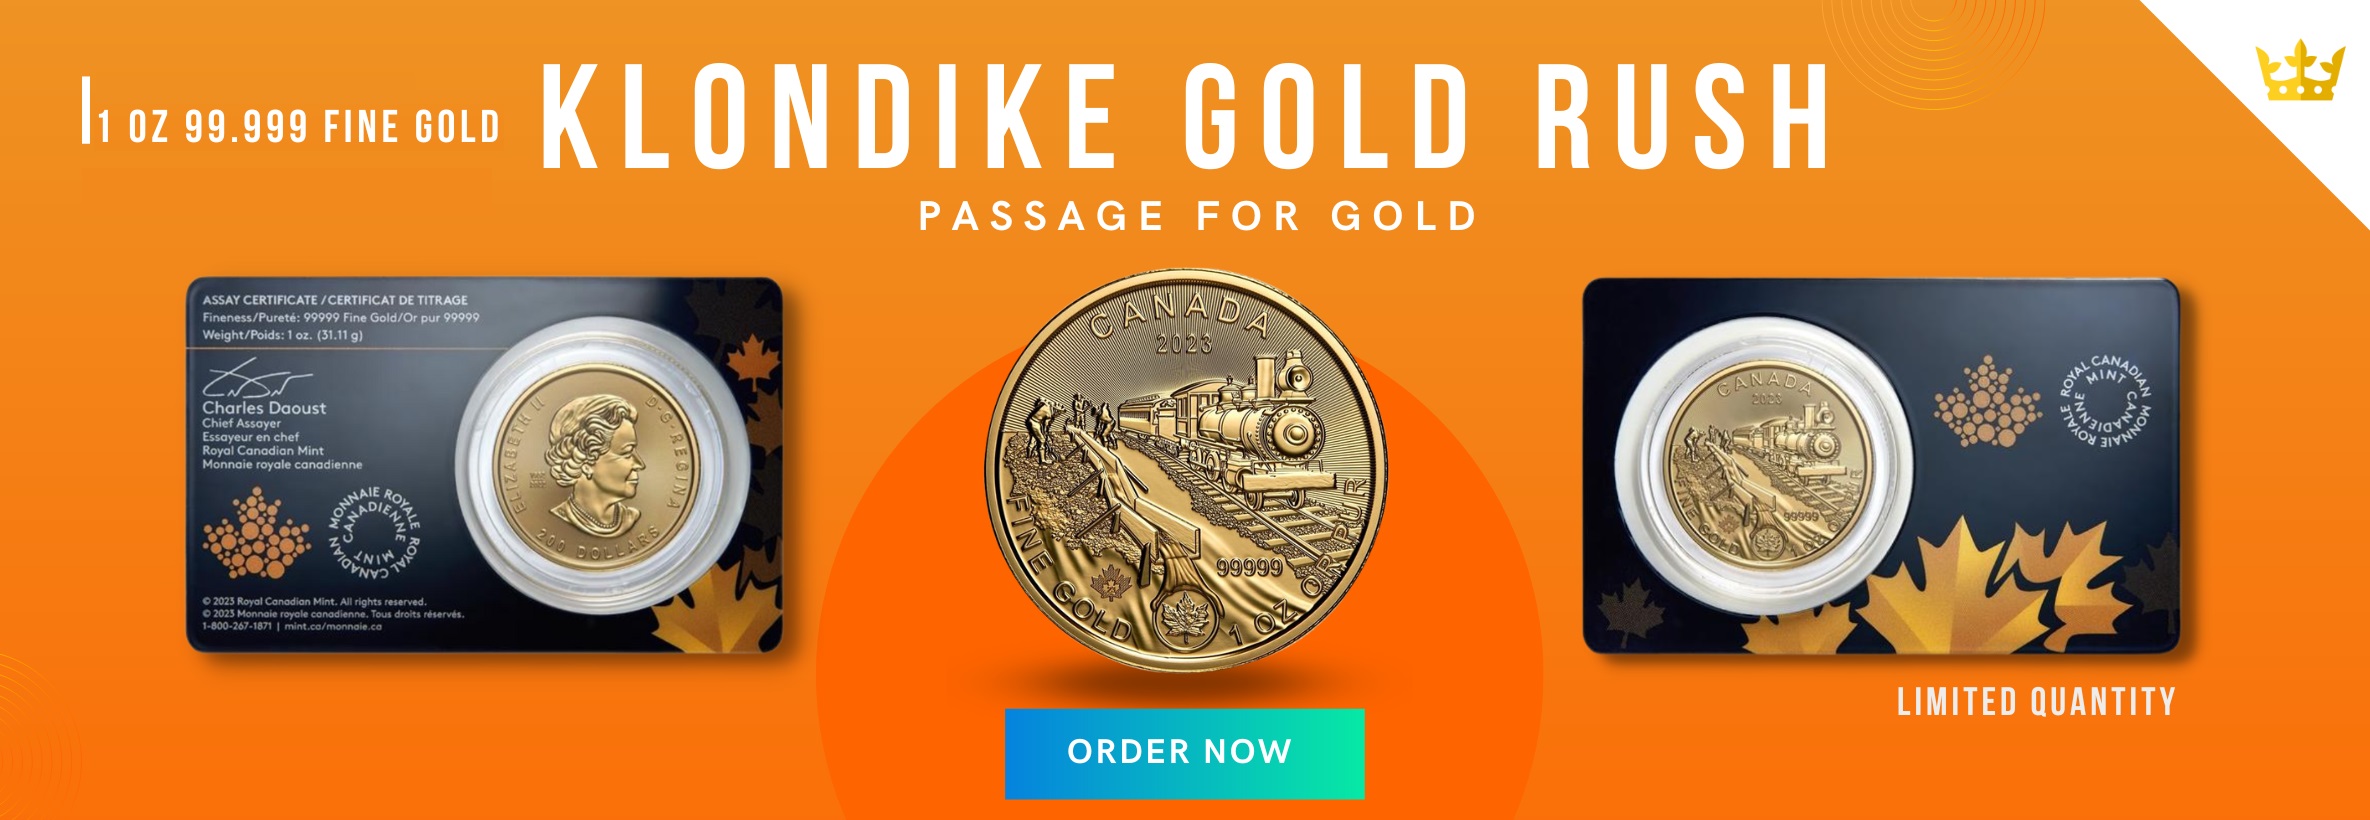 1 oz Gold Coin Klondike Gold Rush : Passage of Gold